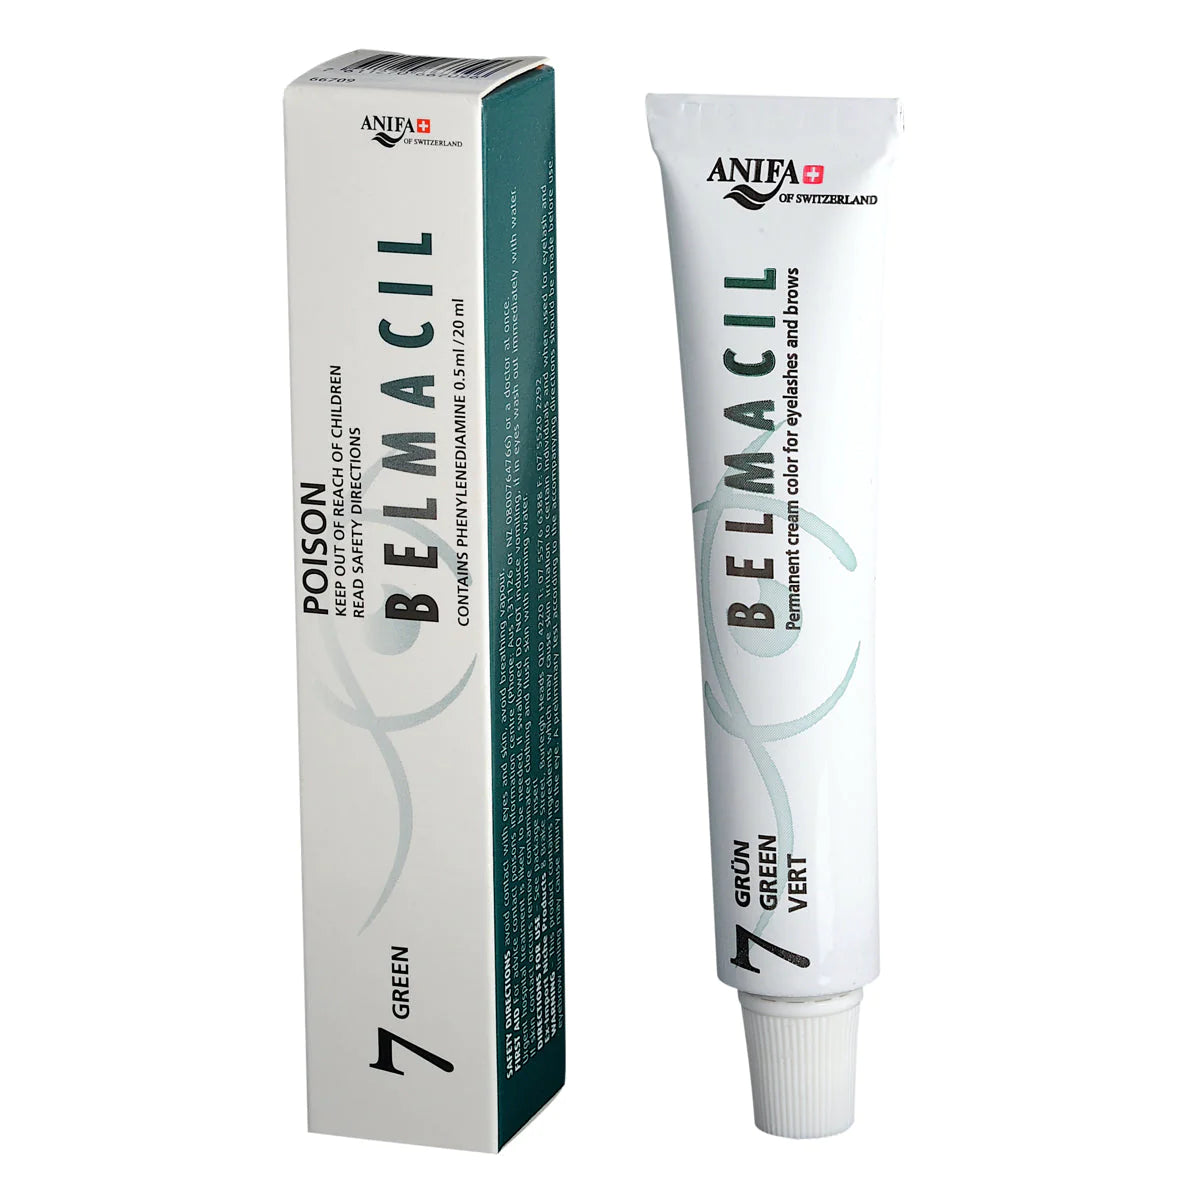 Belmacil Eyelash & Eyebrow Tint 20g - #7 Green